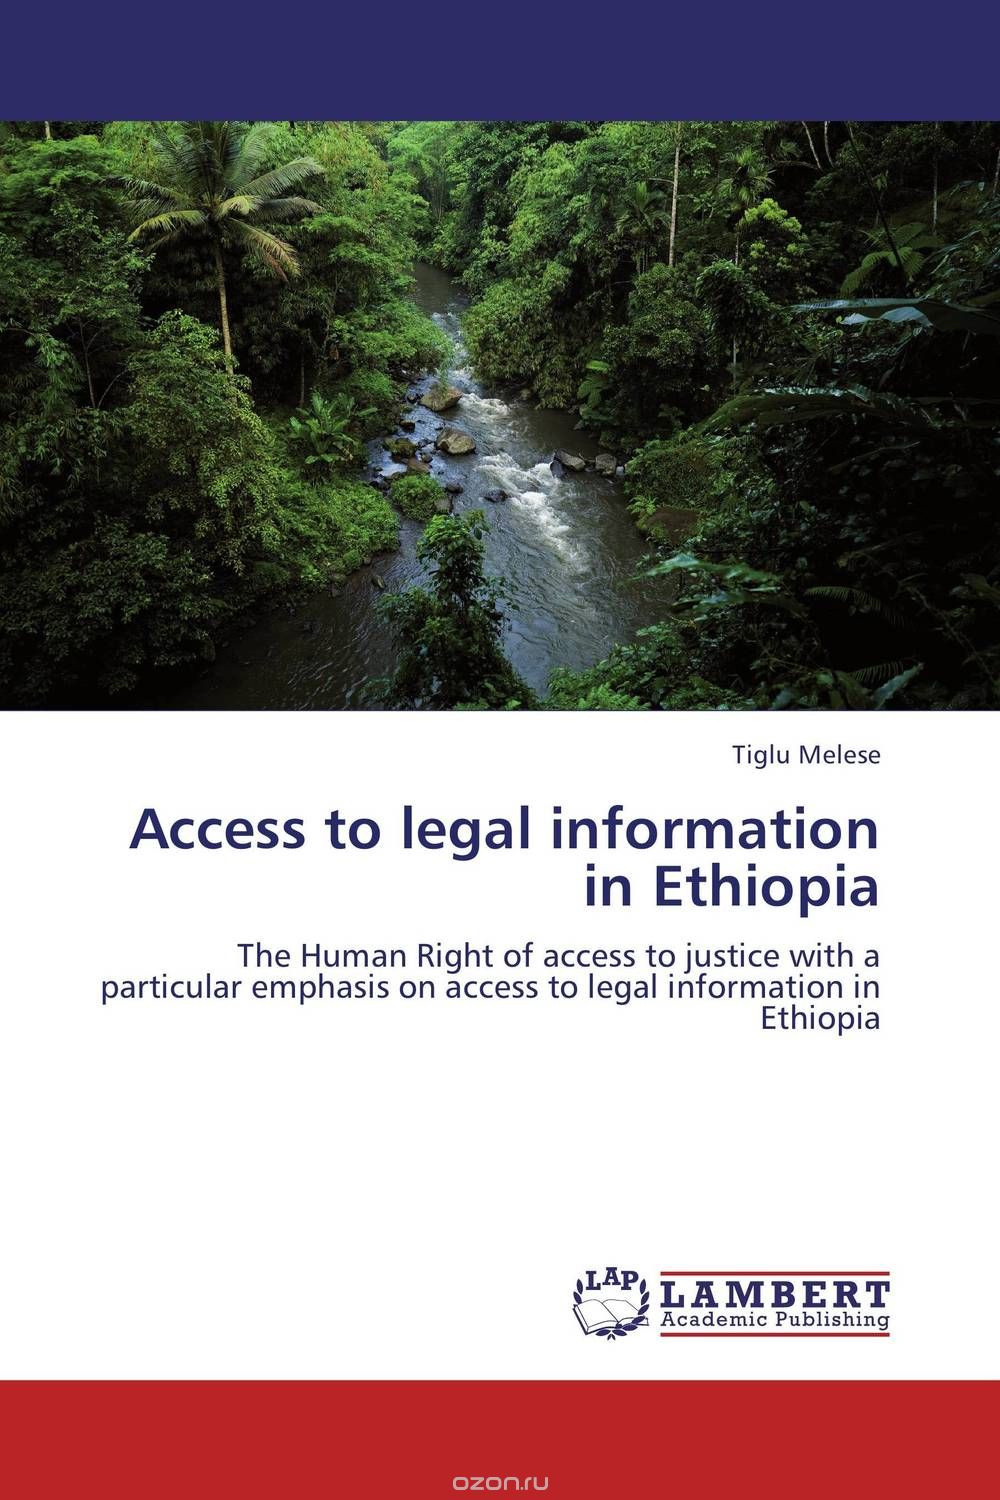 Скачать книгу "Access to legal information in Ethiopia"